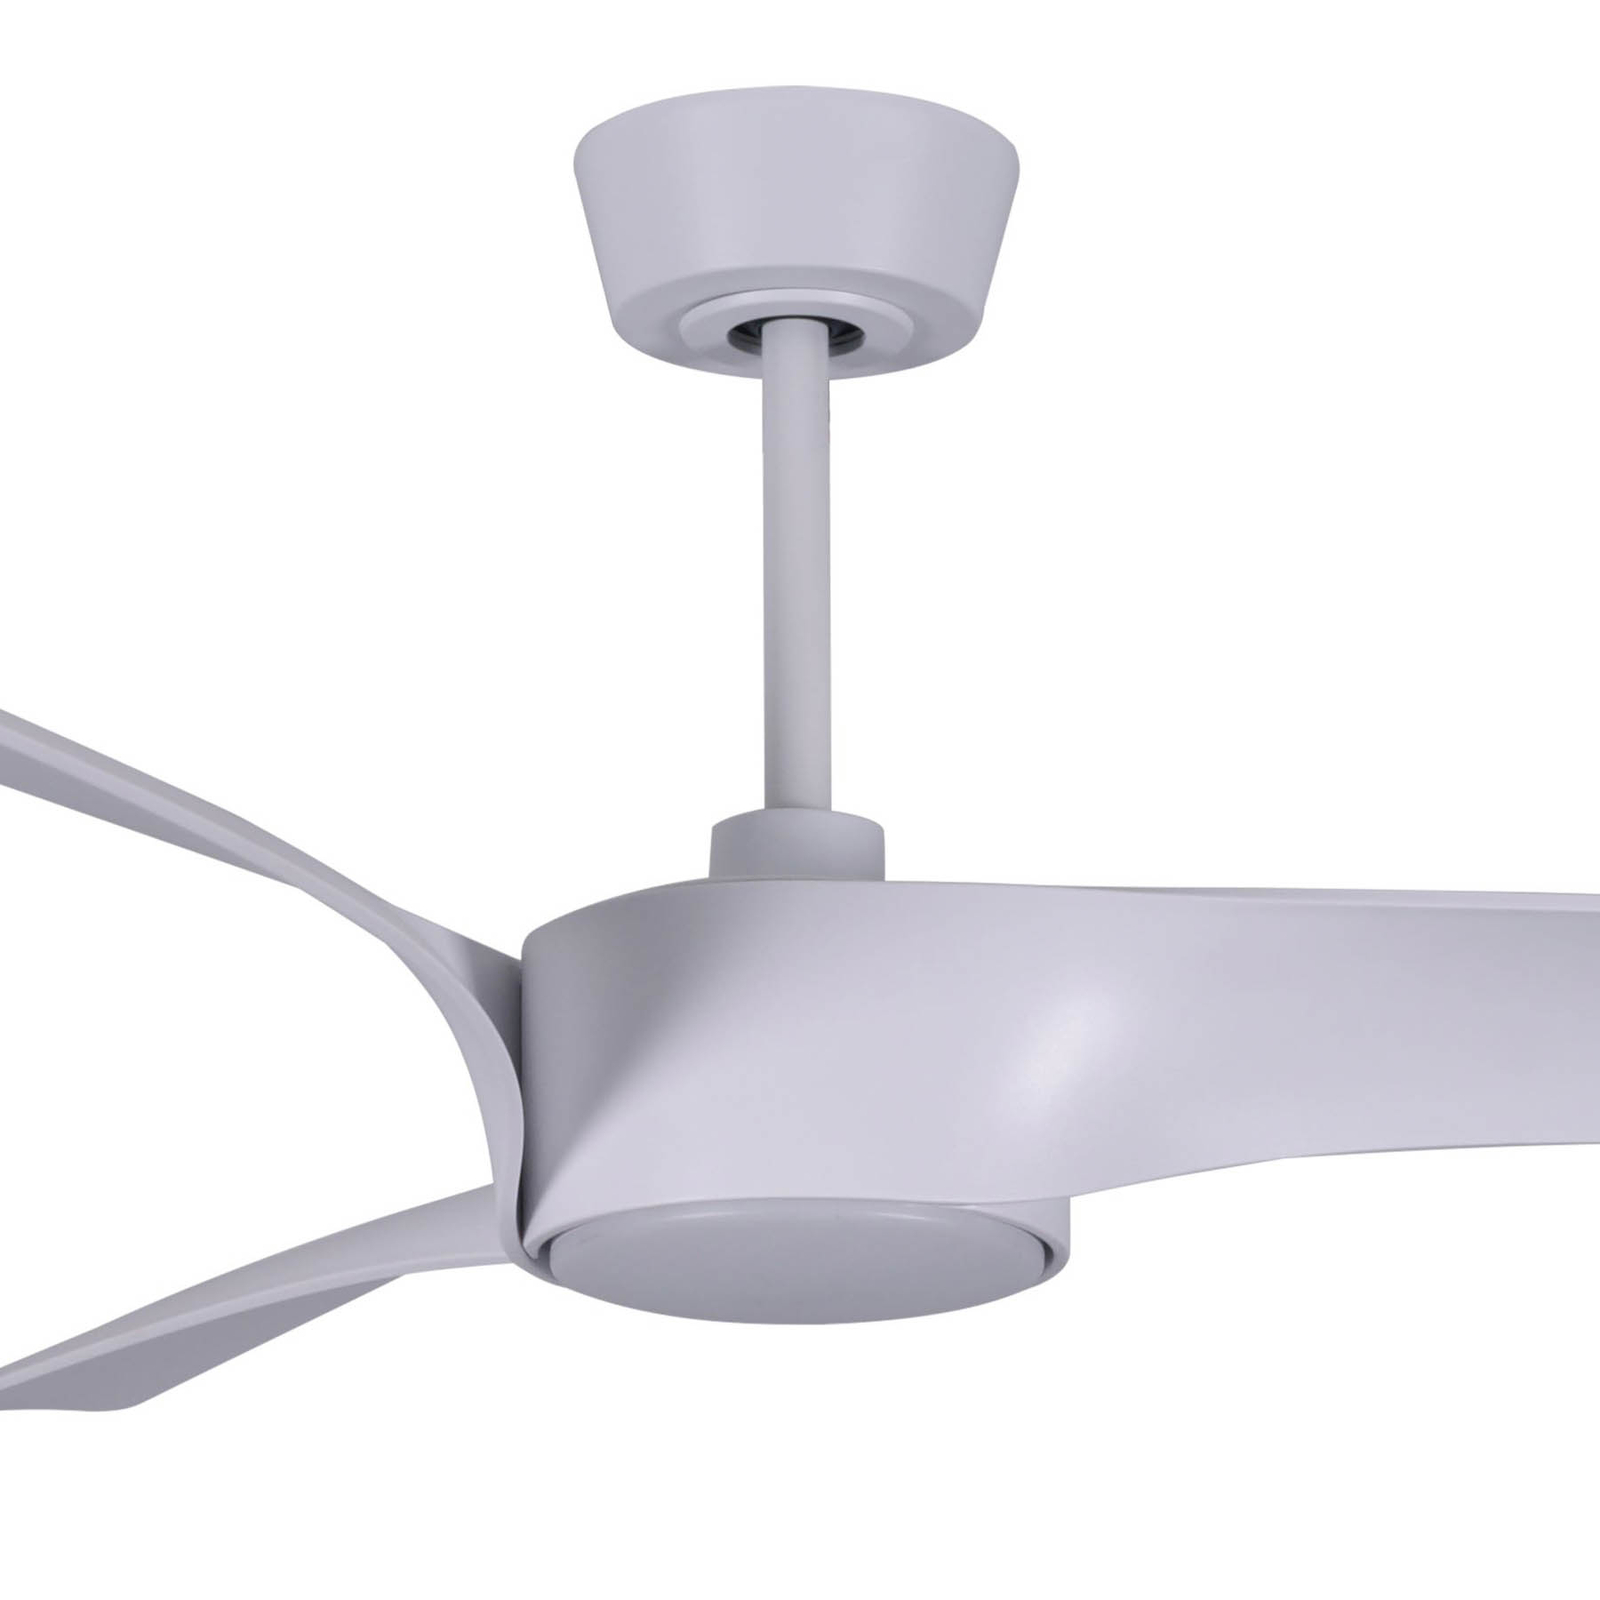 Beacon ceiling fan with light Line, white, Ø 132 cm quiet